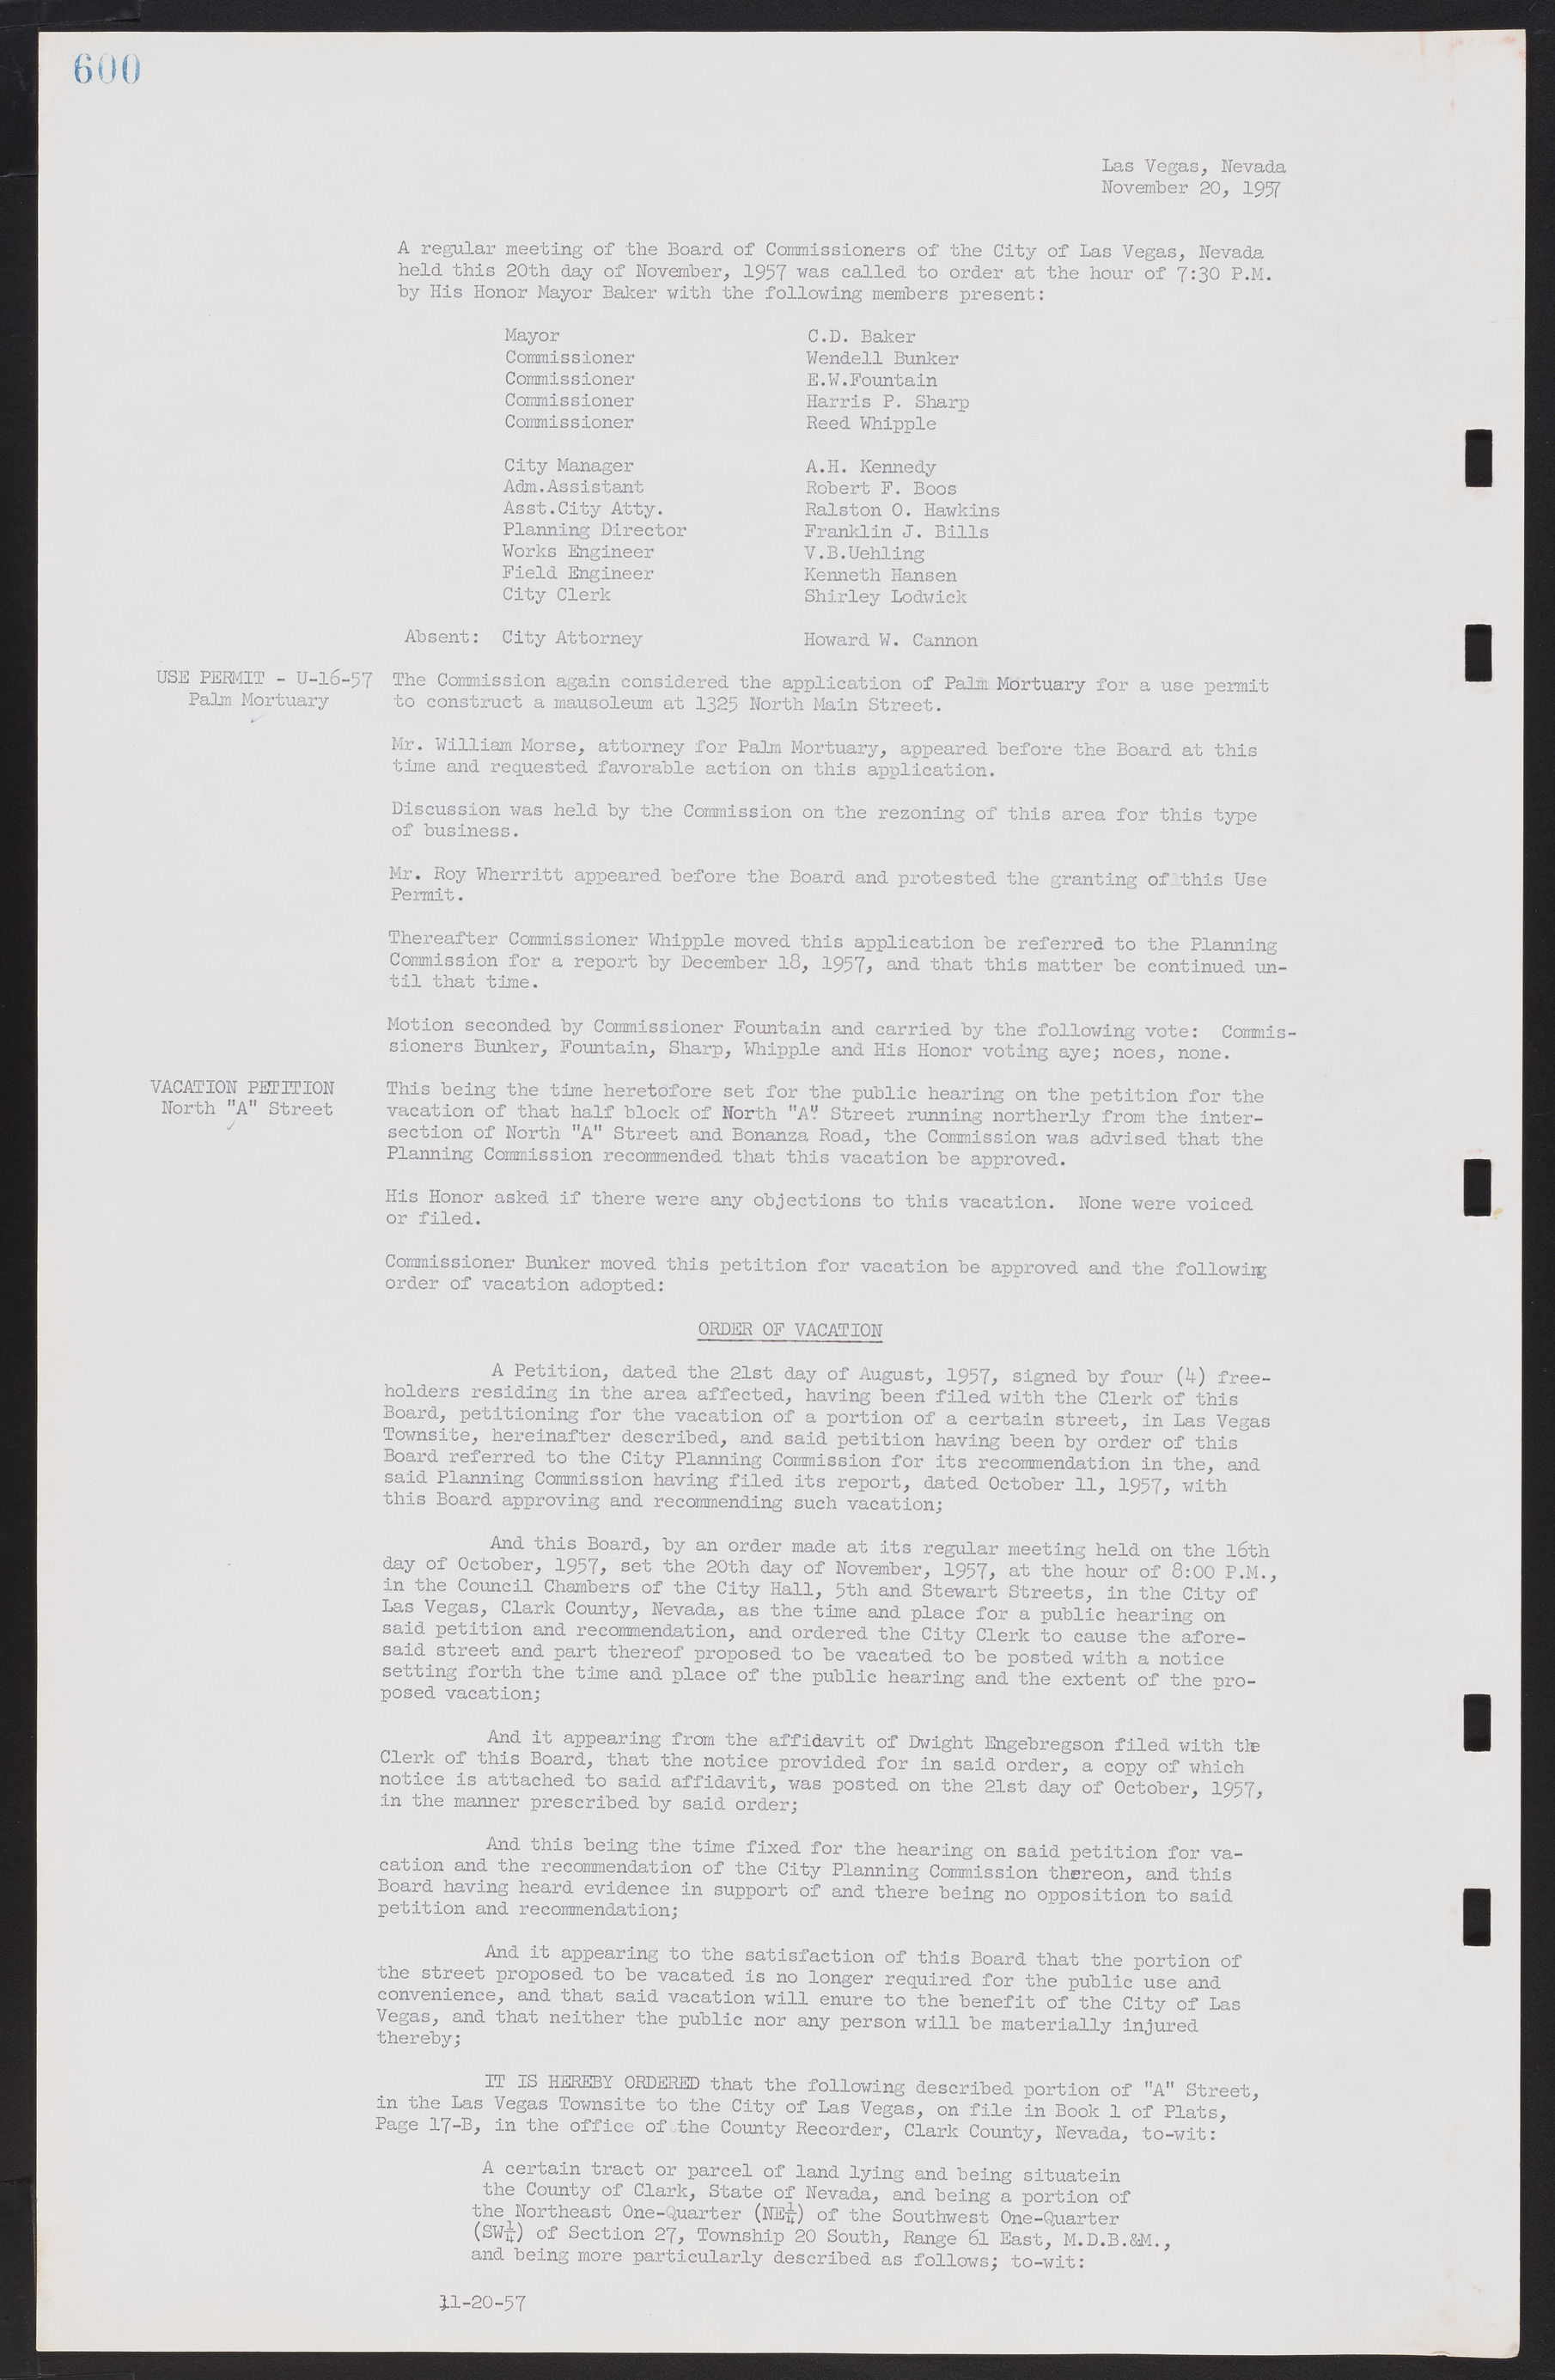 Las Vegas City Commission Minutes, September 21, 1955 to November 20, 1957, lvc000010-620